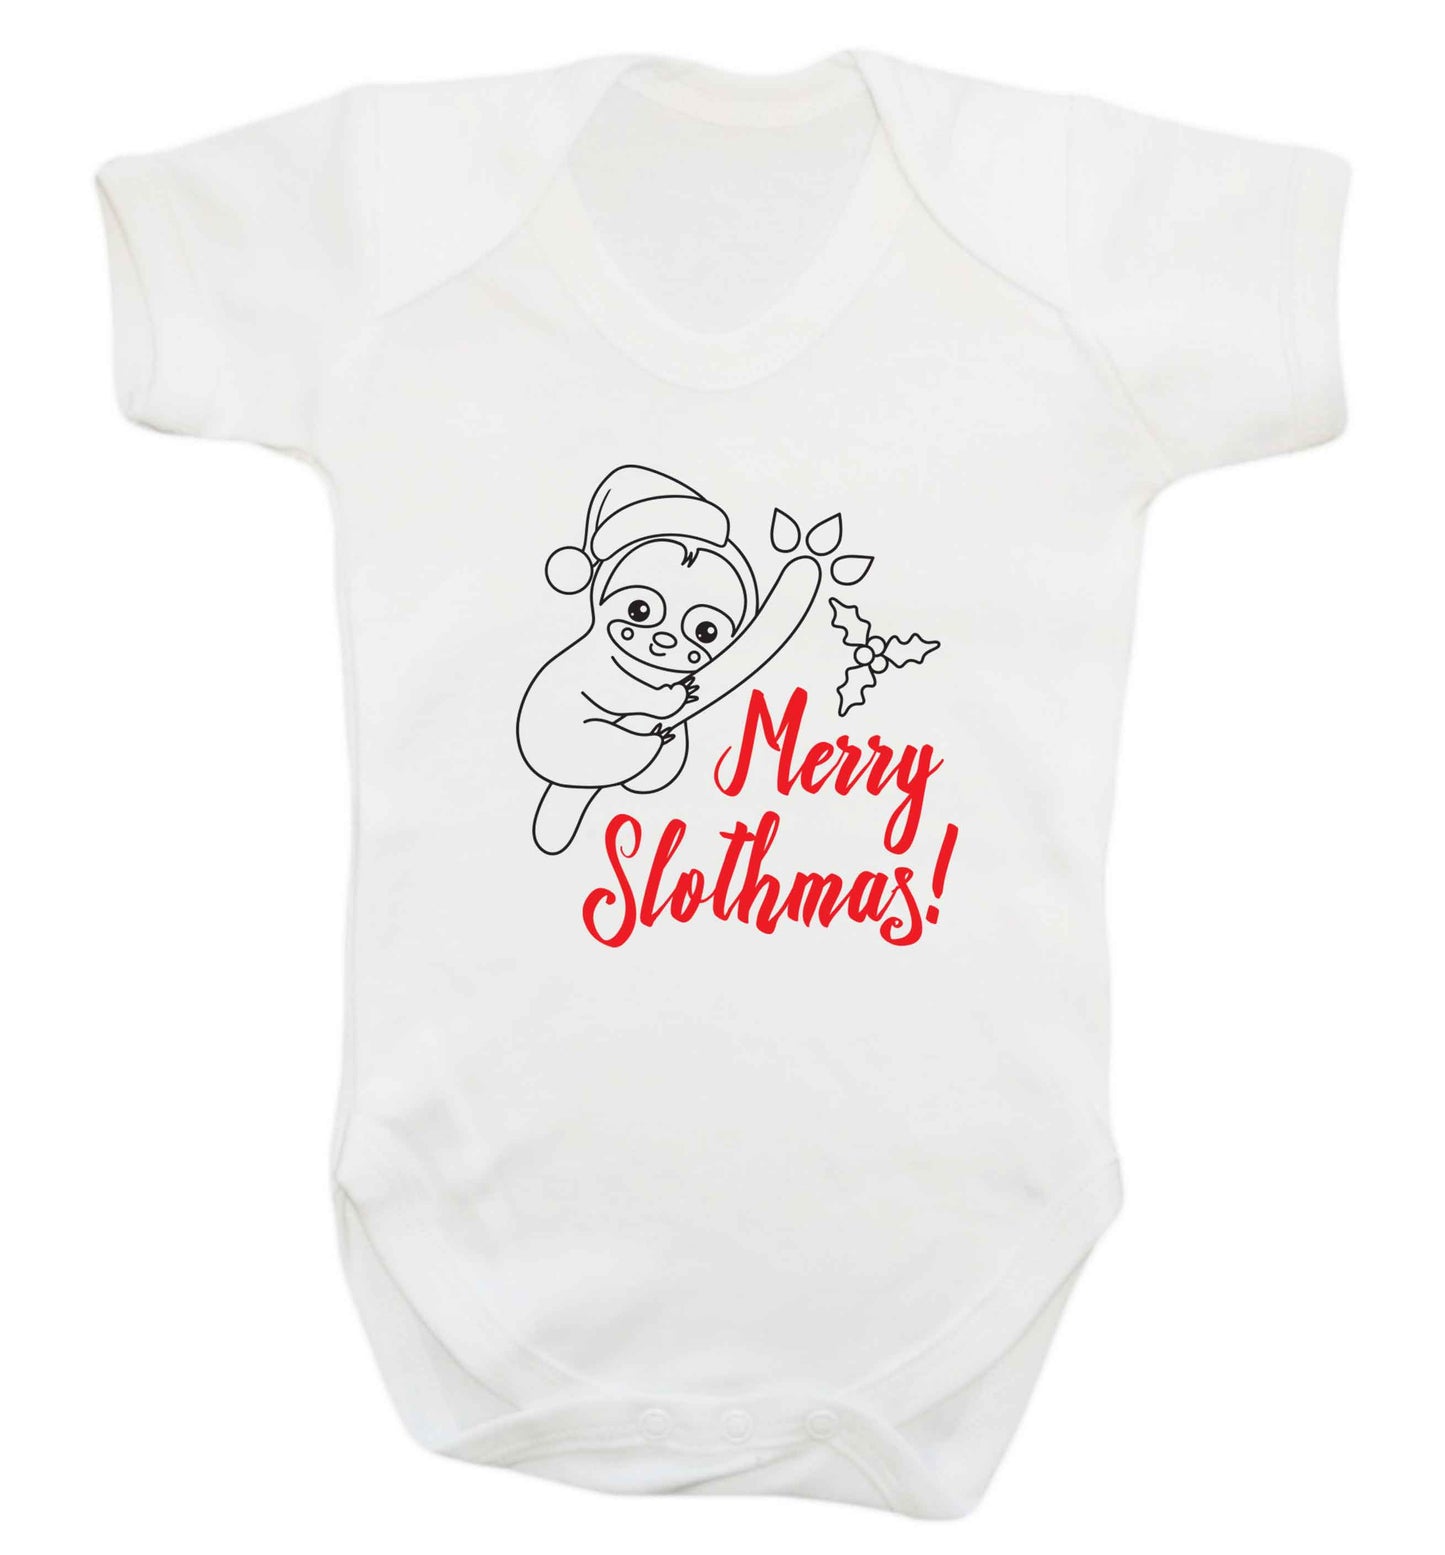 Merry Slothmas baby vest white 18-24 months